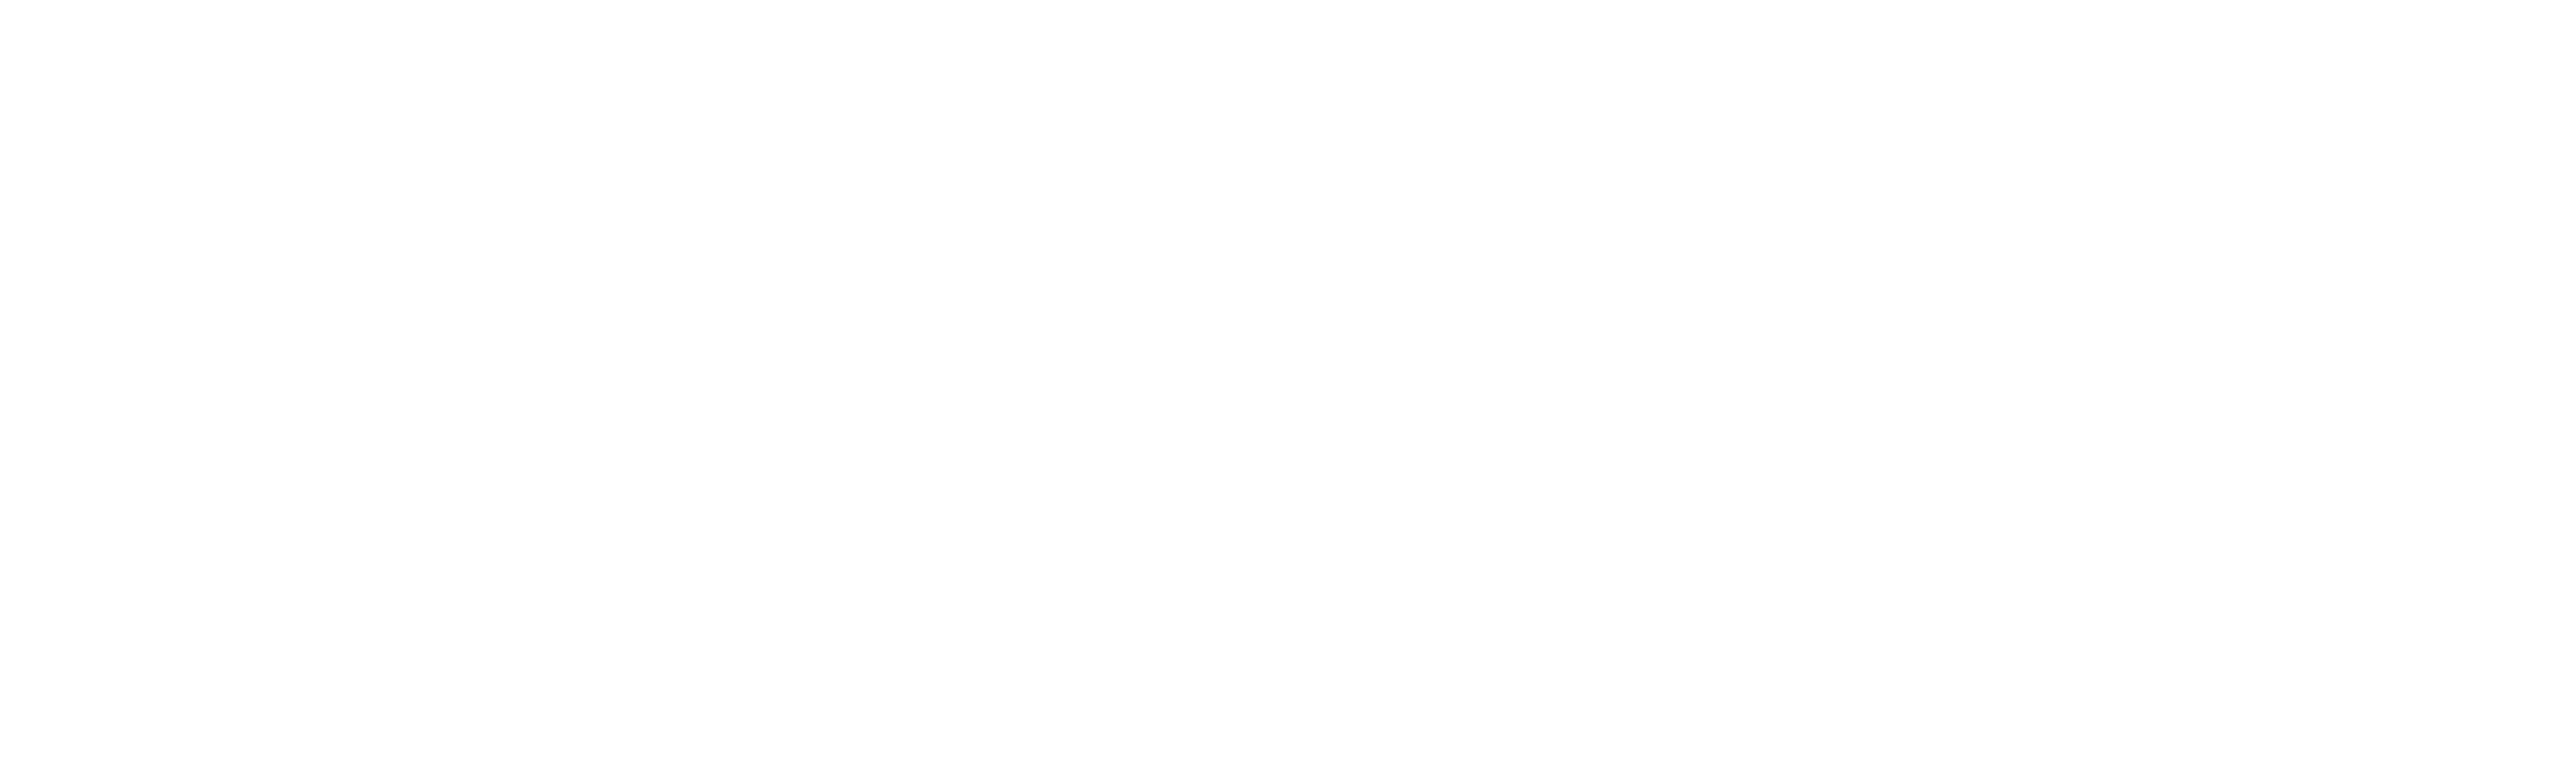 McCay Caldwell